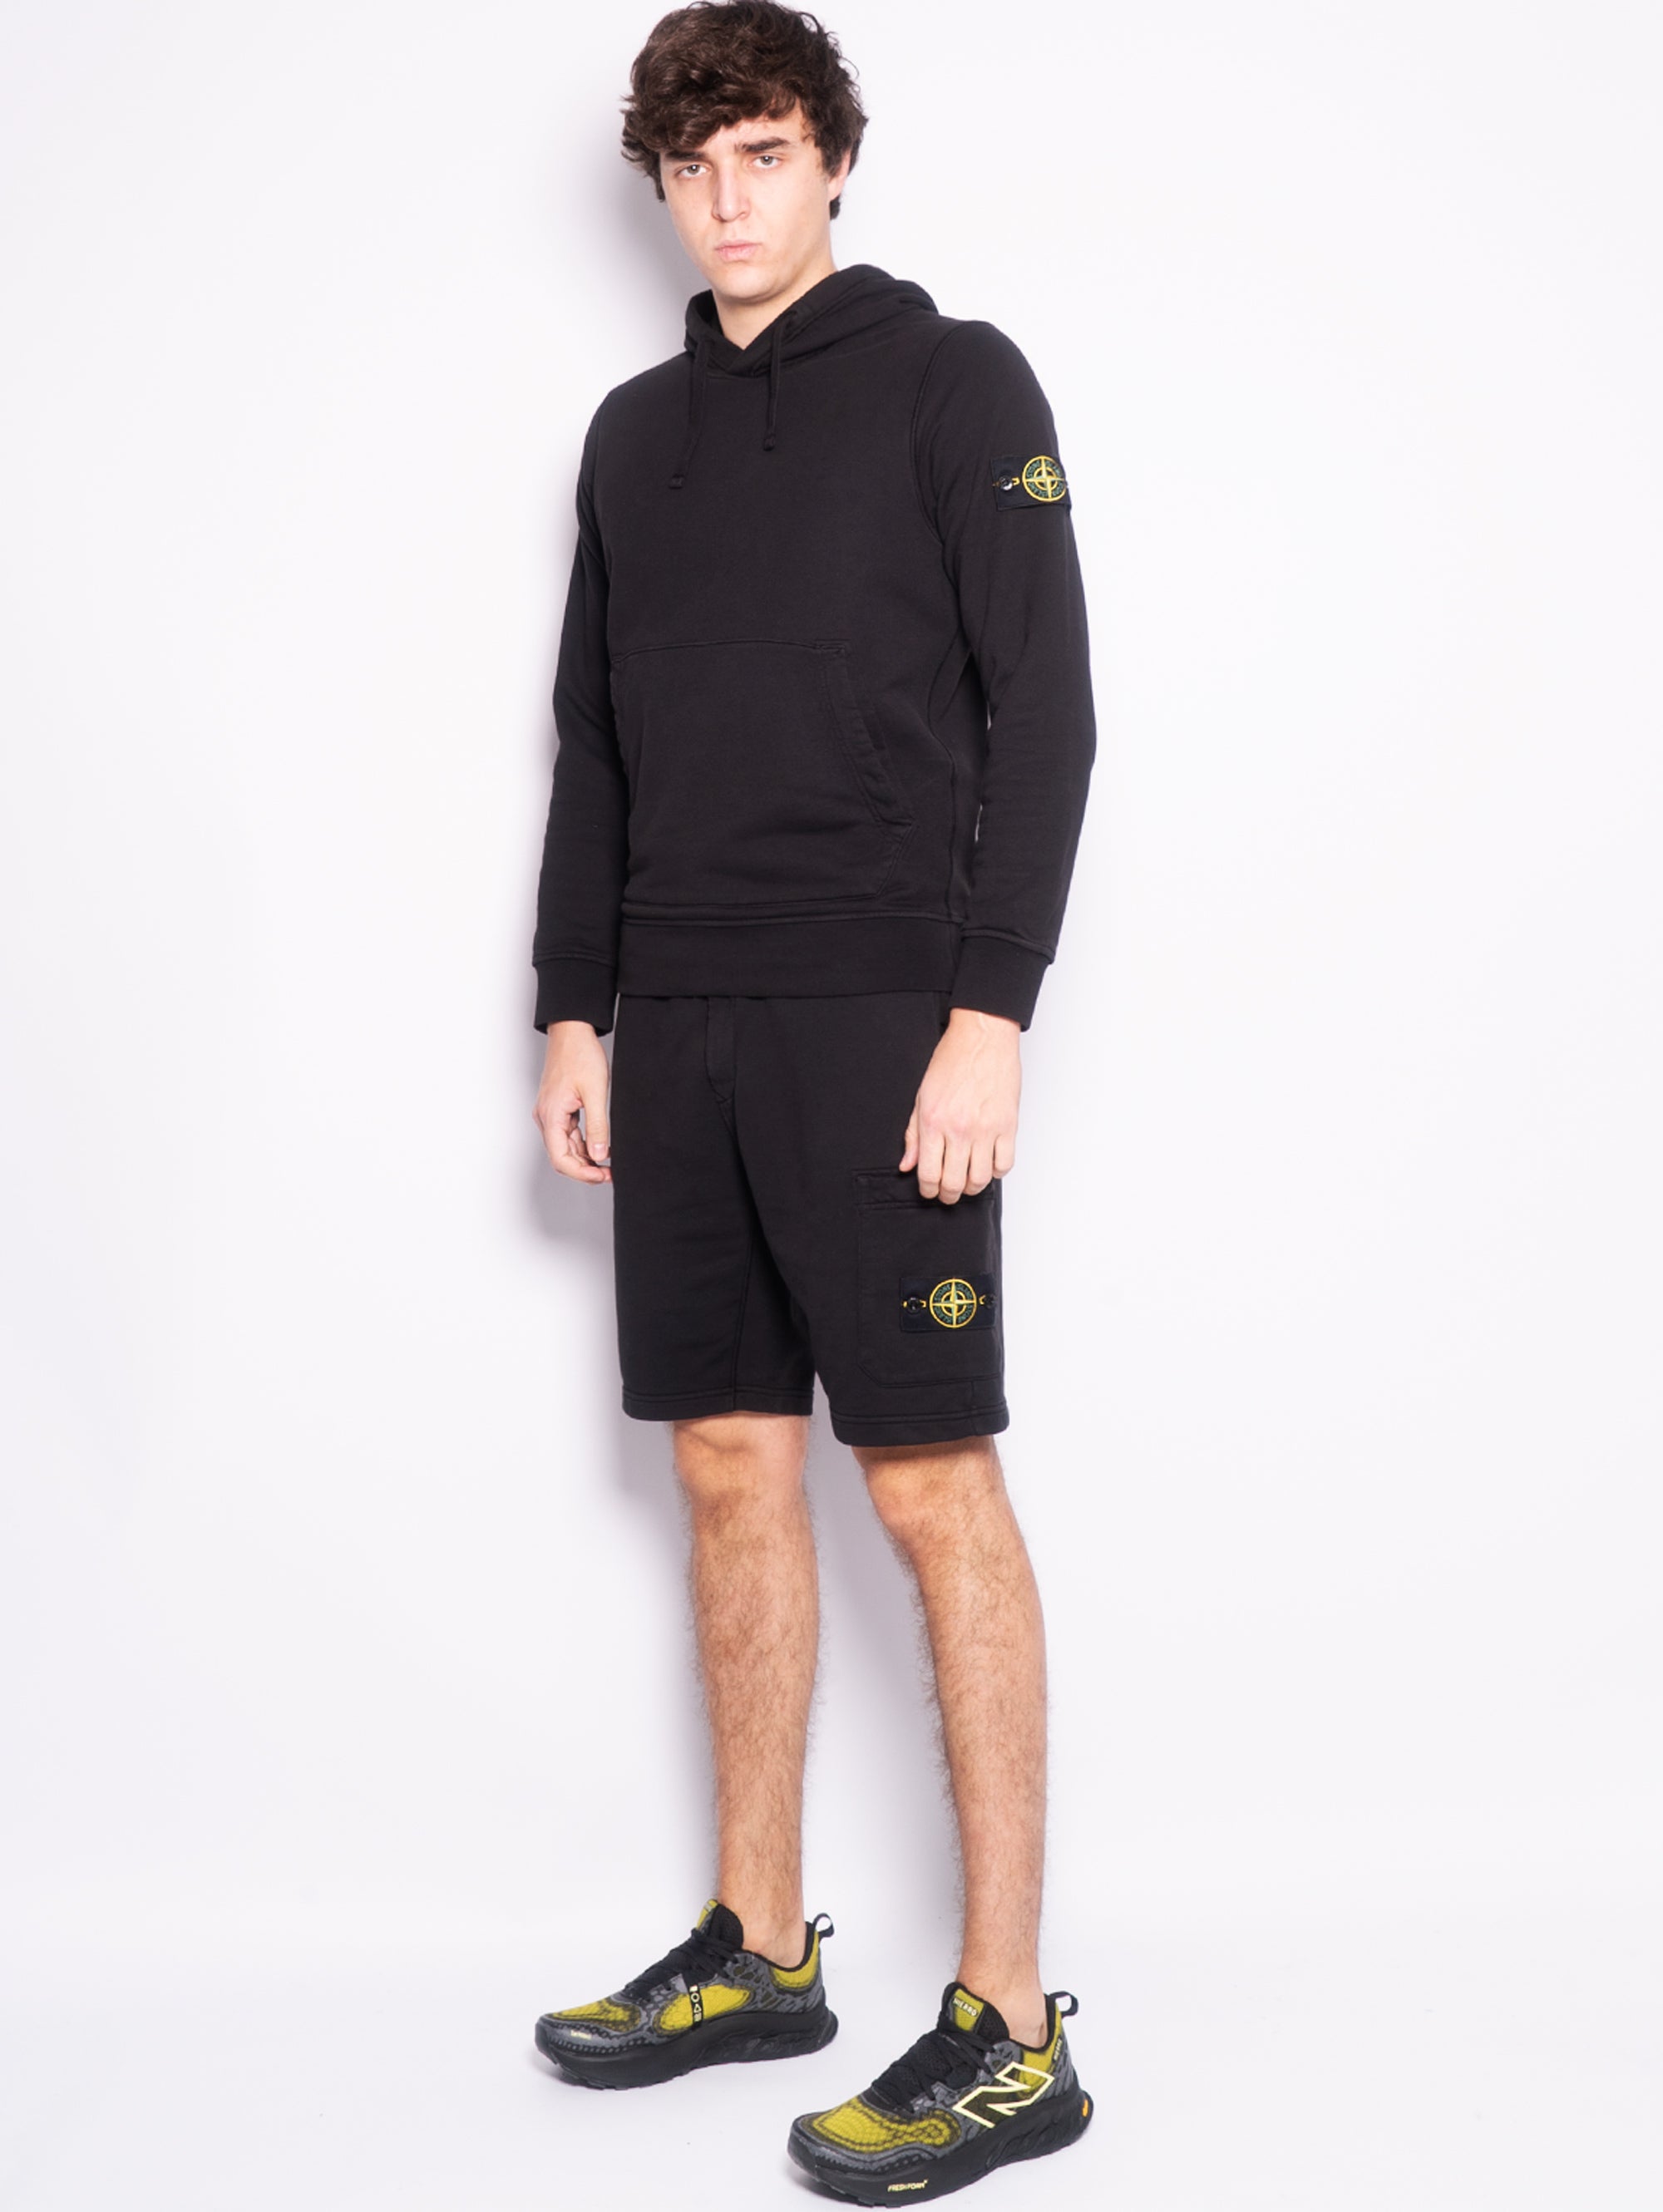 Black fleece Bermuda shorts